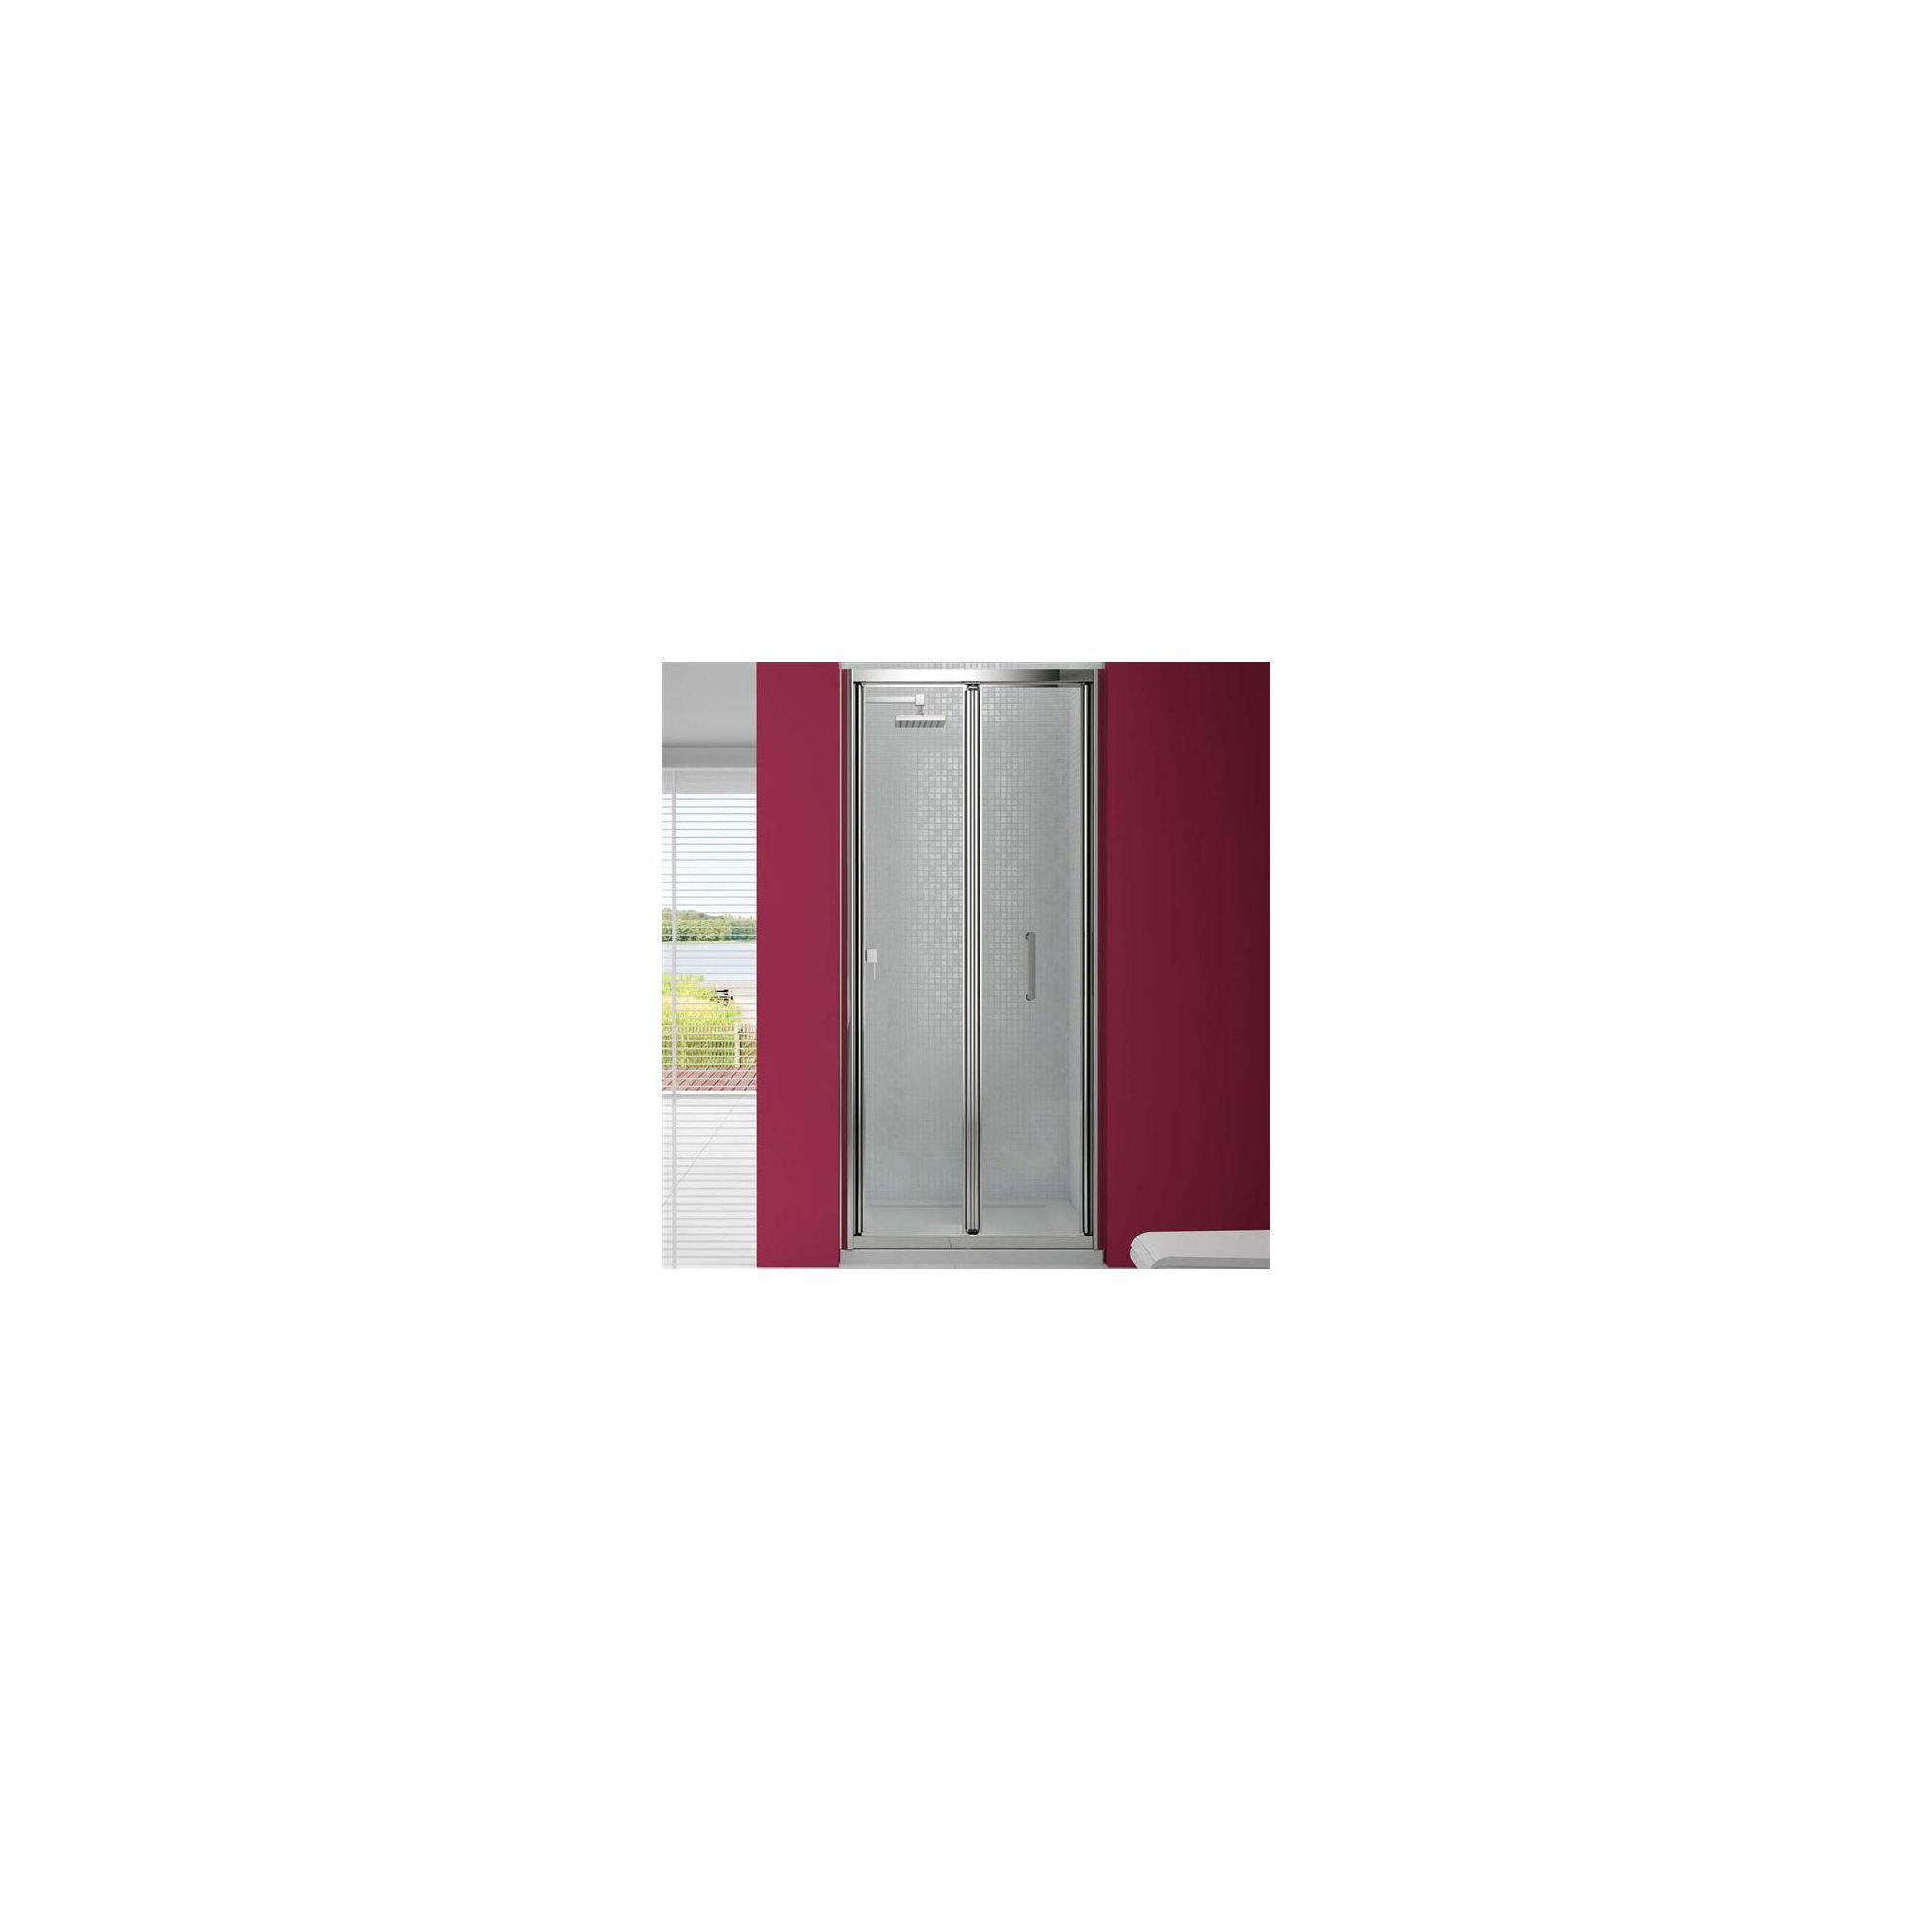 Merlyn Vivid Six Bi-Fold Door Shower Enclosure, 900mm x 900mm, Low Profile Tray, 6mm Glass at Tesco Direct